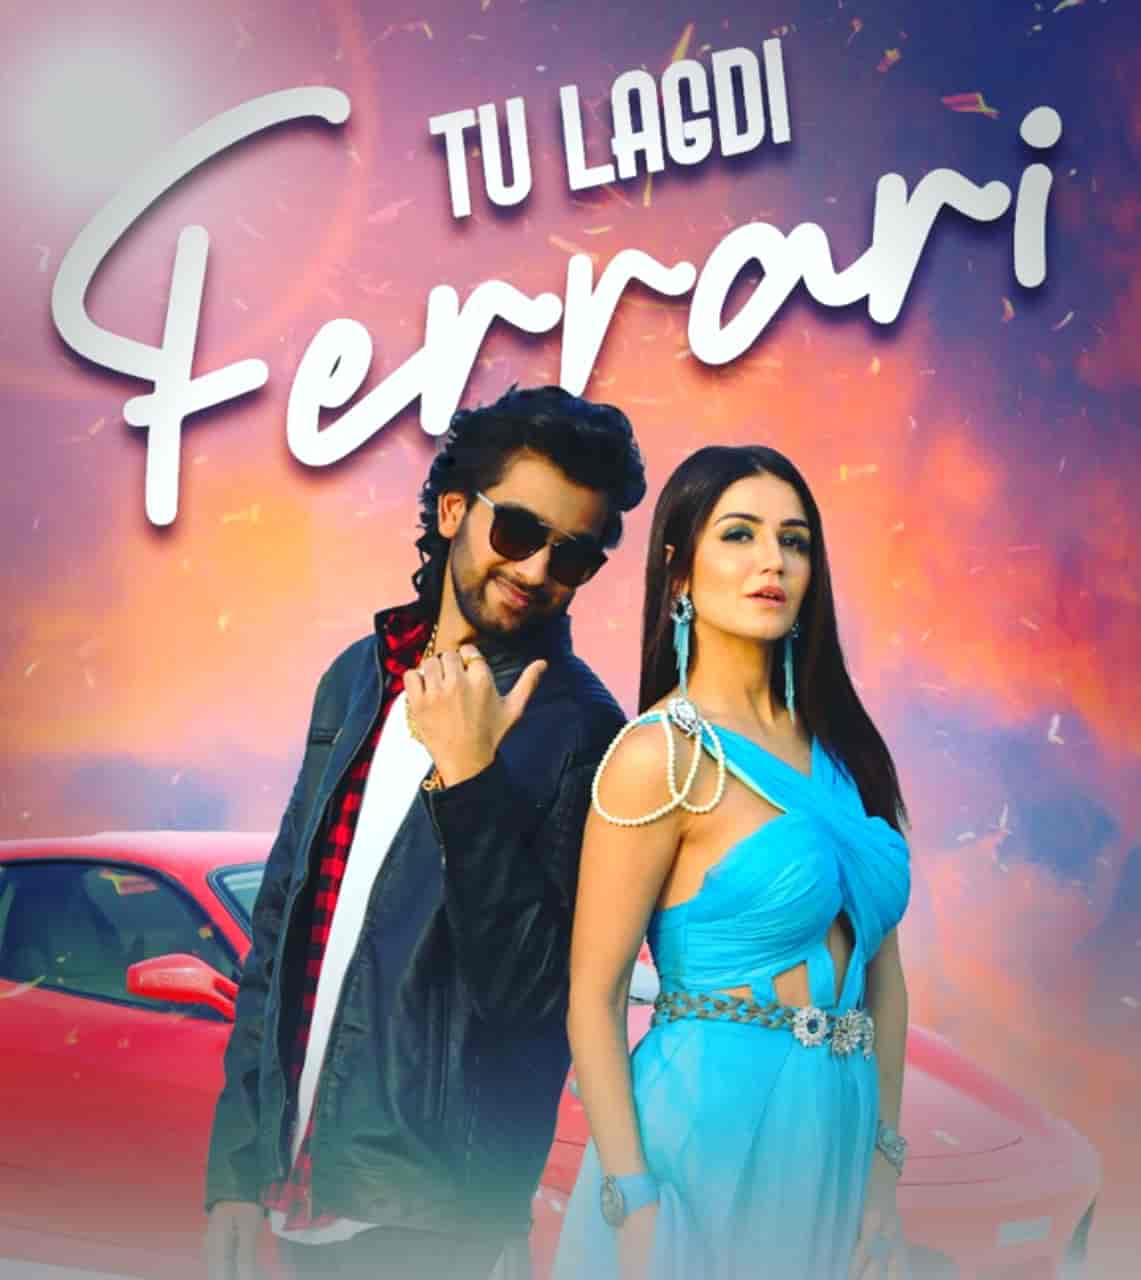 Tu Lagdi Ferrari Punjabi Song Image Features Arradhya Maan And Amy Aela